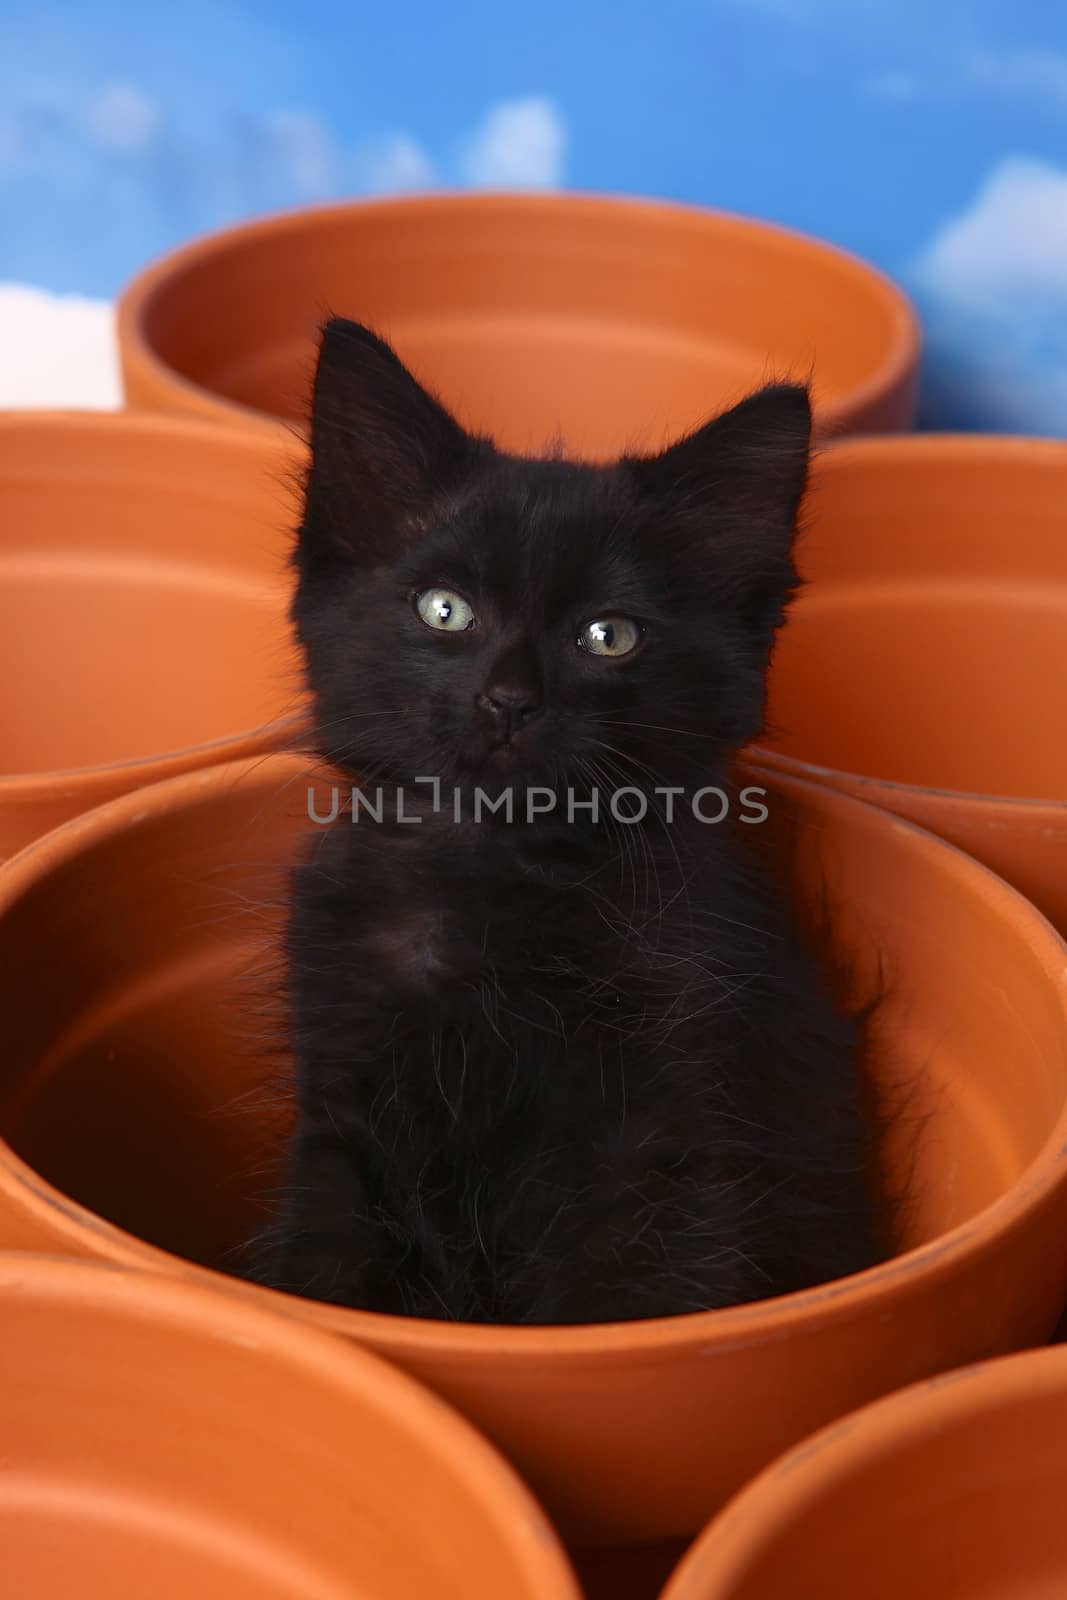 Cute Kitten Inside a Clay Pot